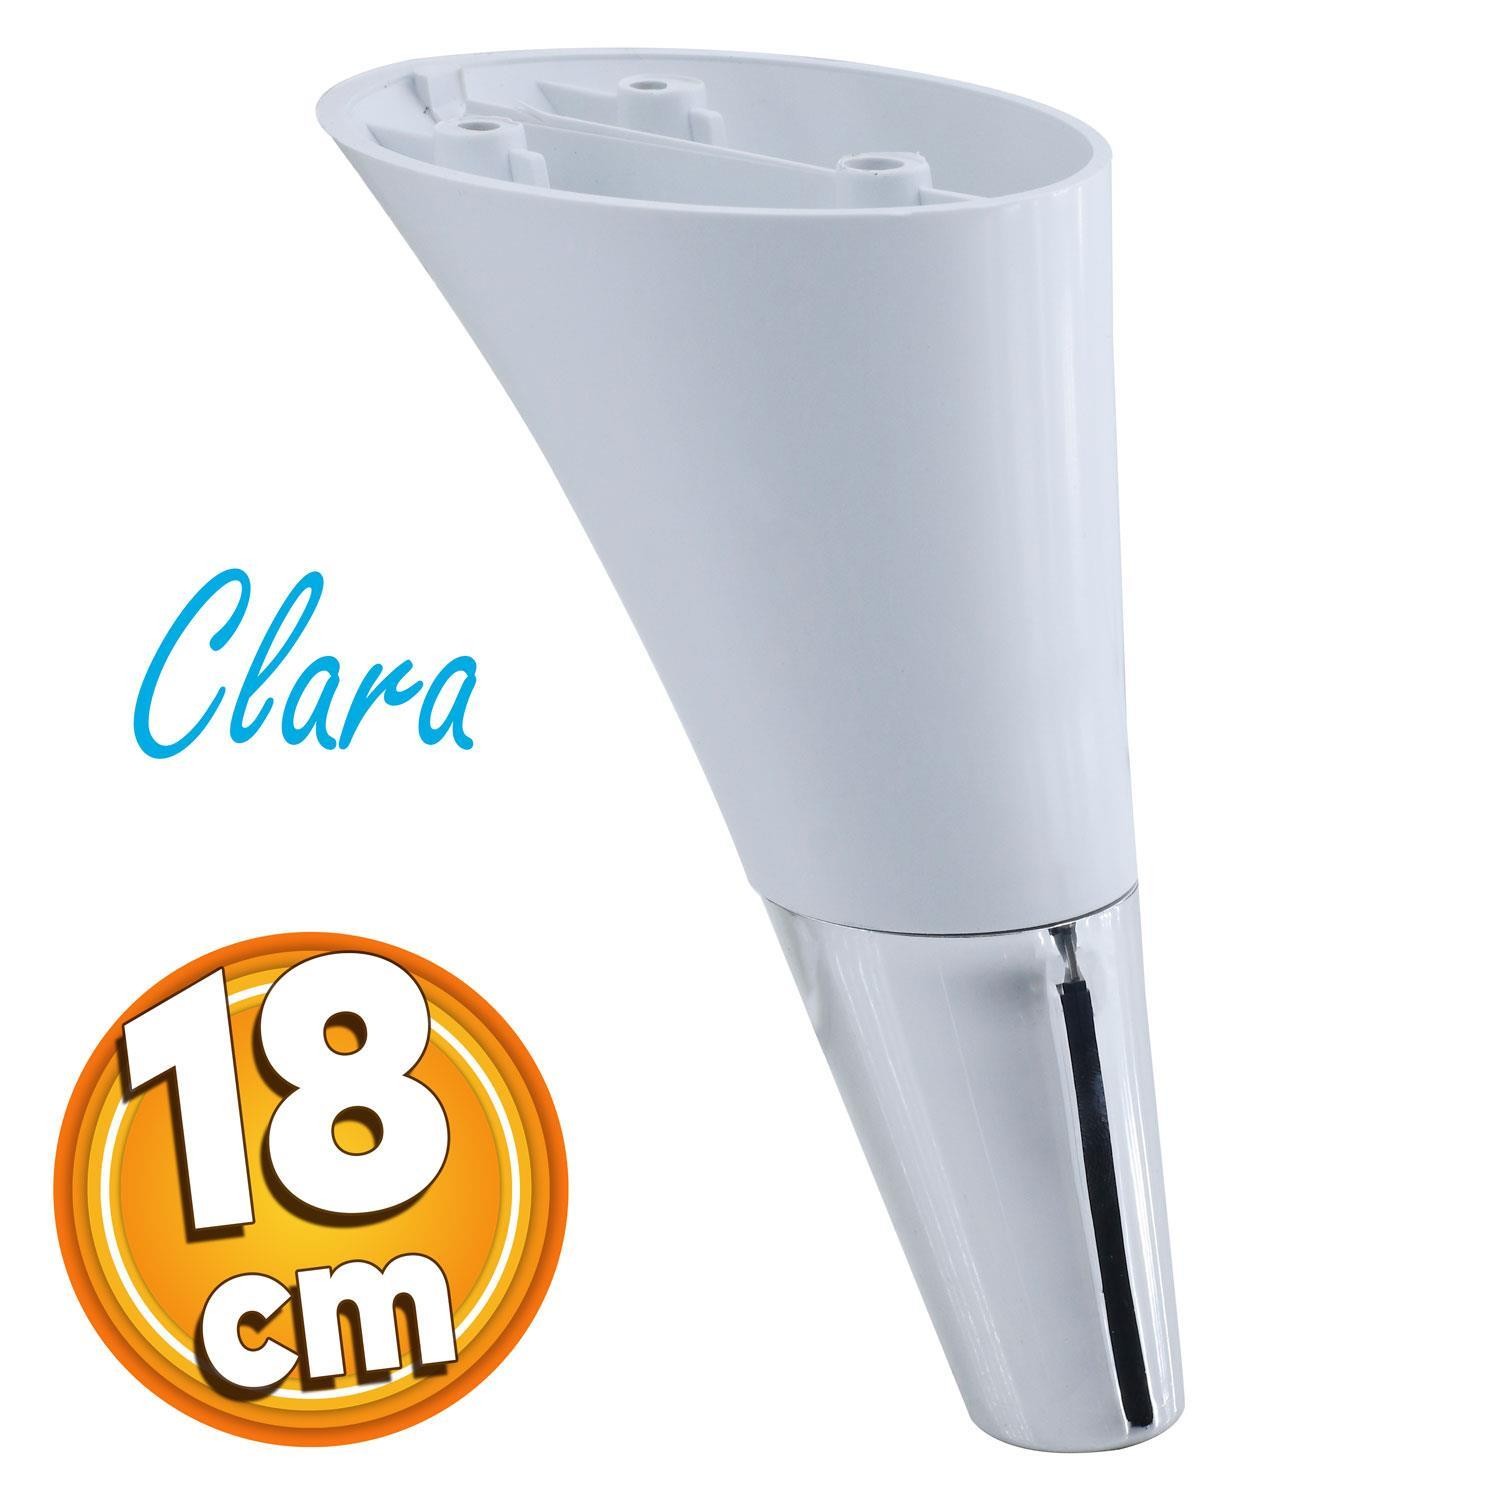 Clara Mobilya Kanepe Sehpa TV Ünitesi Baza Koltuk Ayağı Beyaz Krom Renk 18 cm (4 Adet)